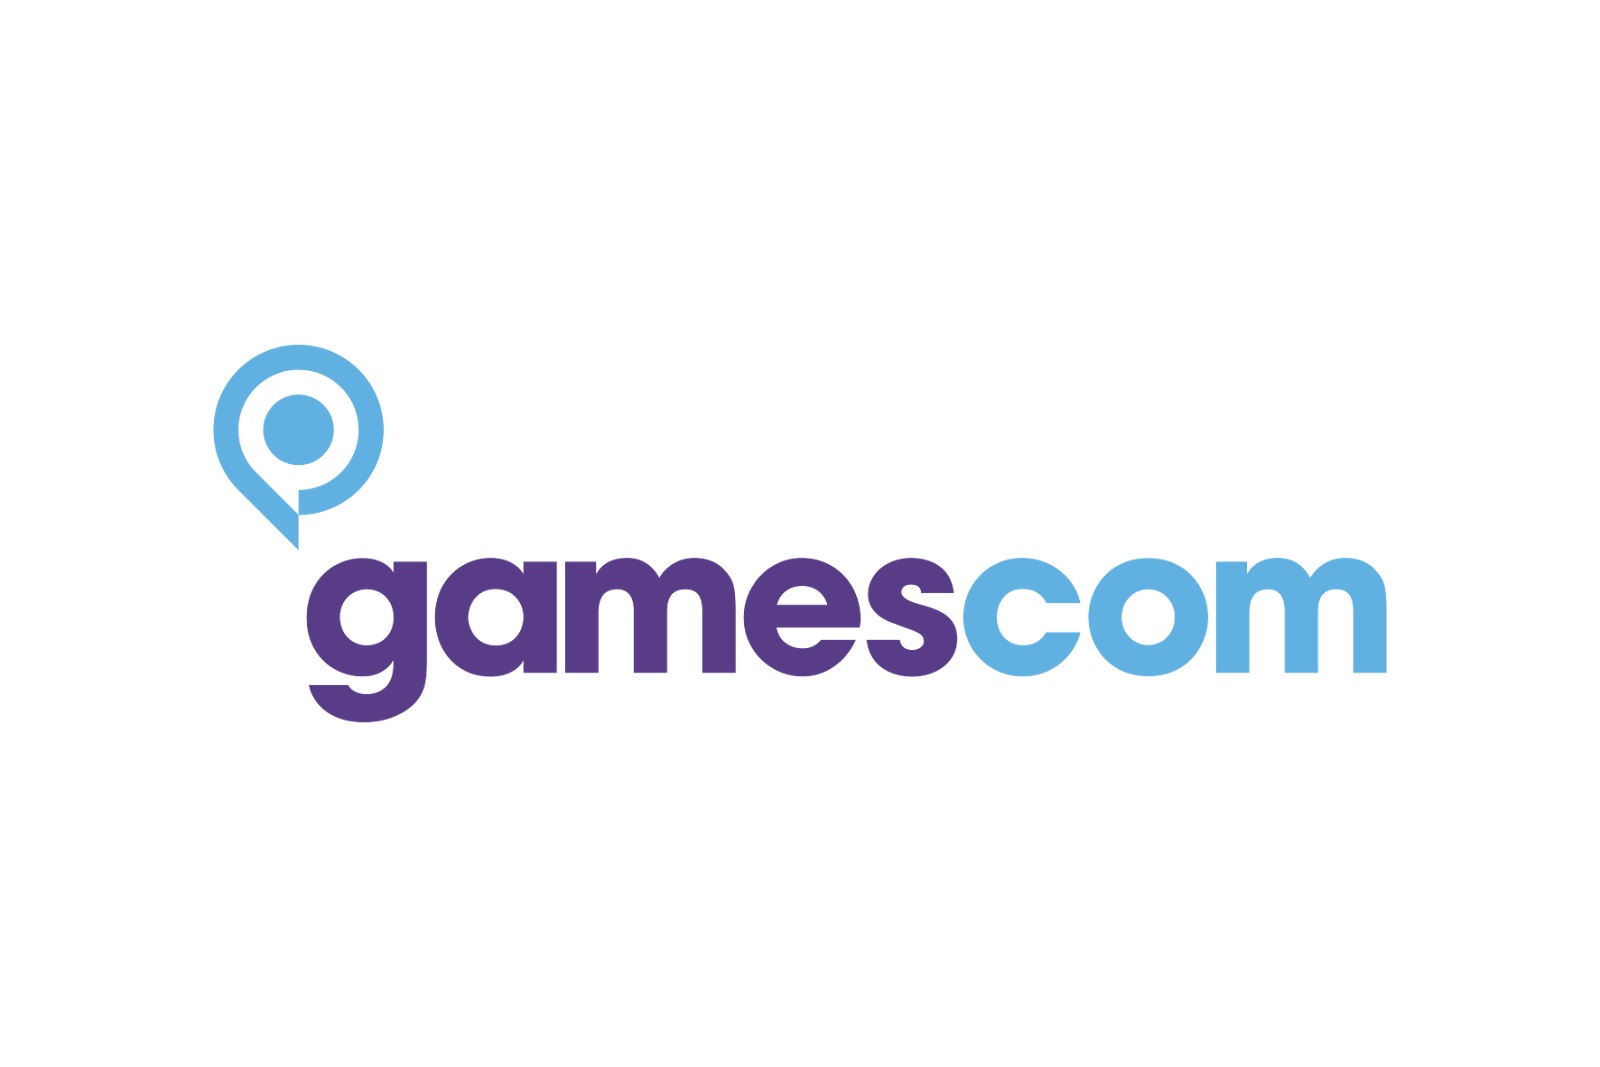 Akibat Virus Corona, Gamescom 2020 Digelar Secara Online